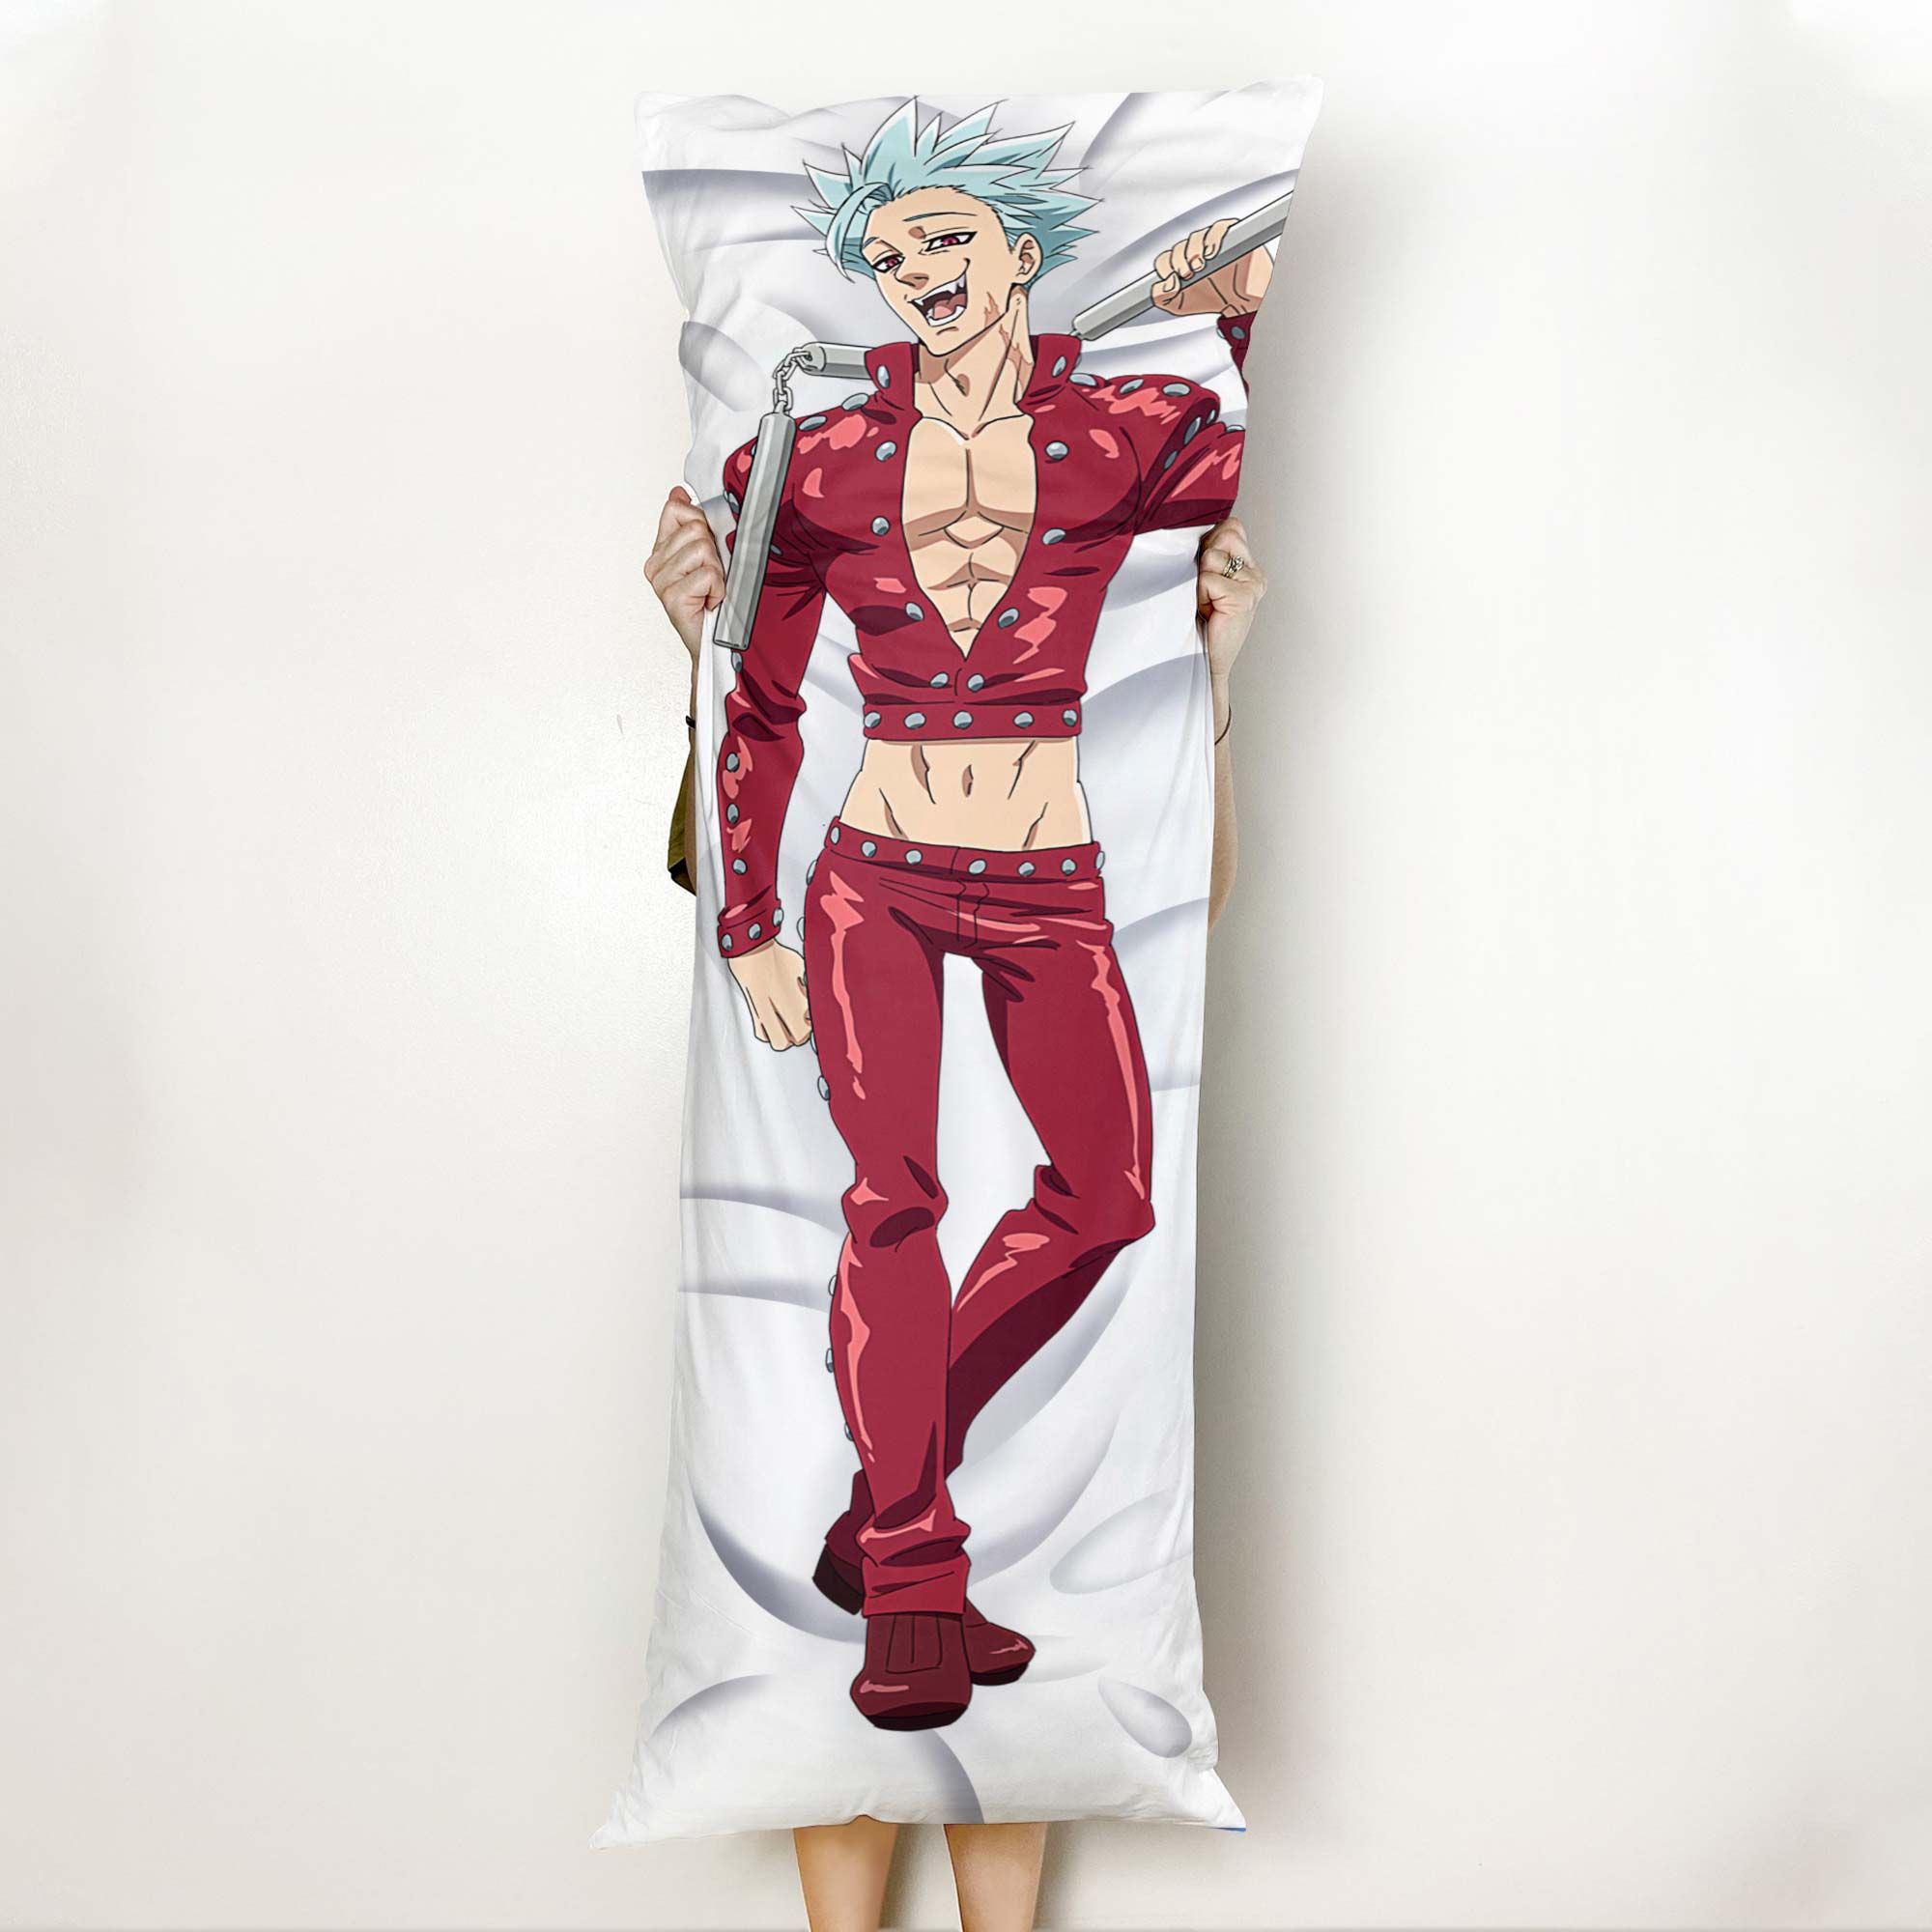 Ban Body Pillow Dakimakura Cover Custom The Seven Deadly Sins Anime Gifts OT2102